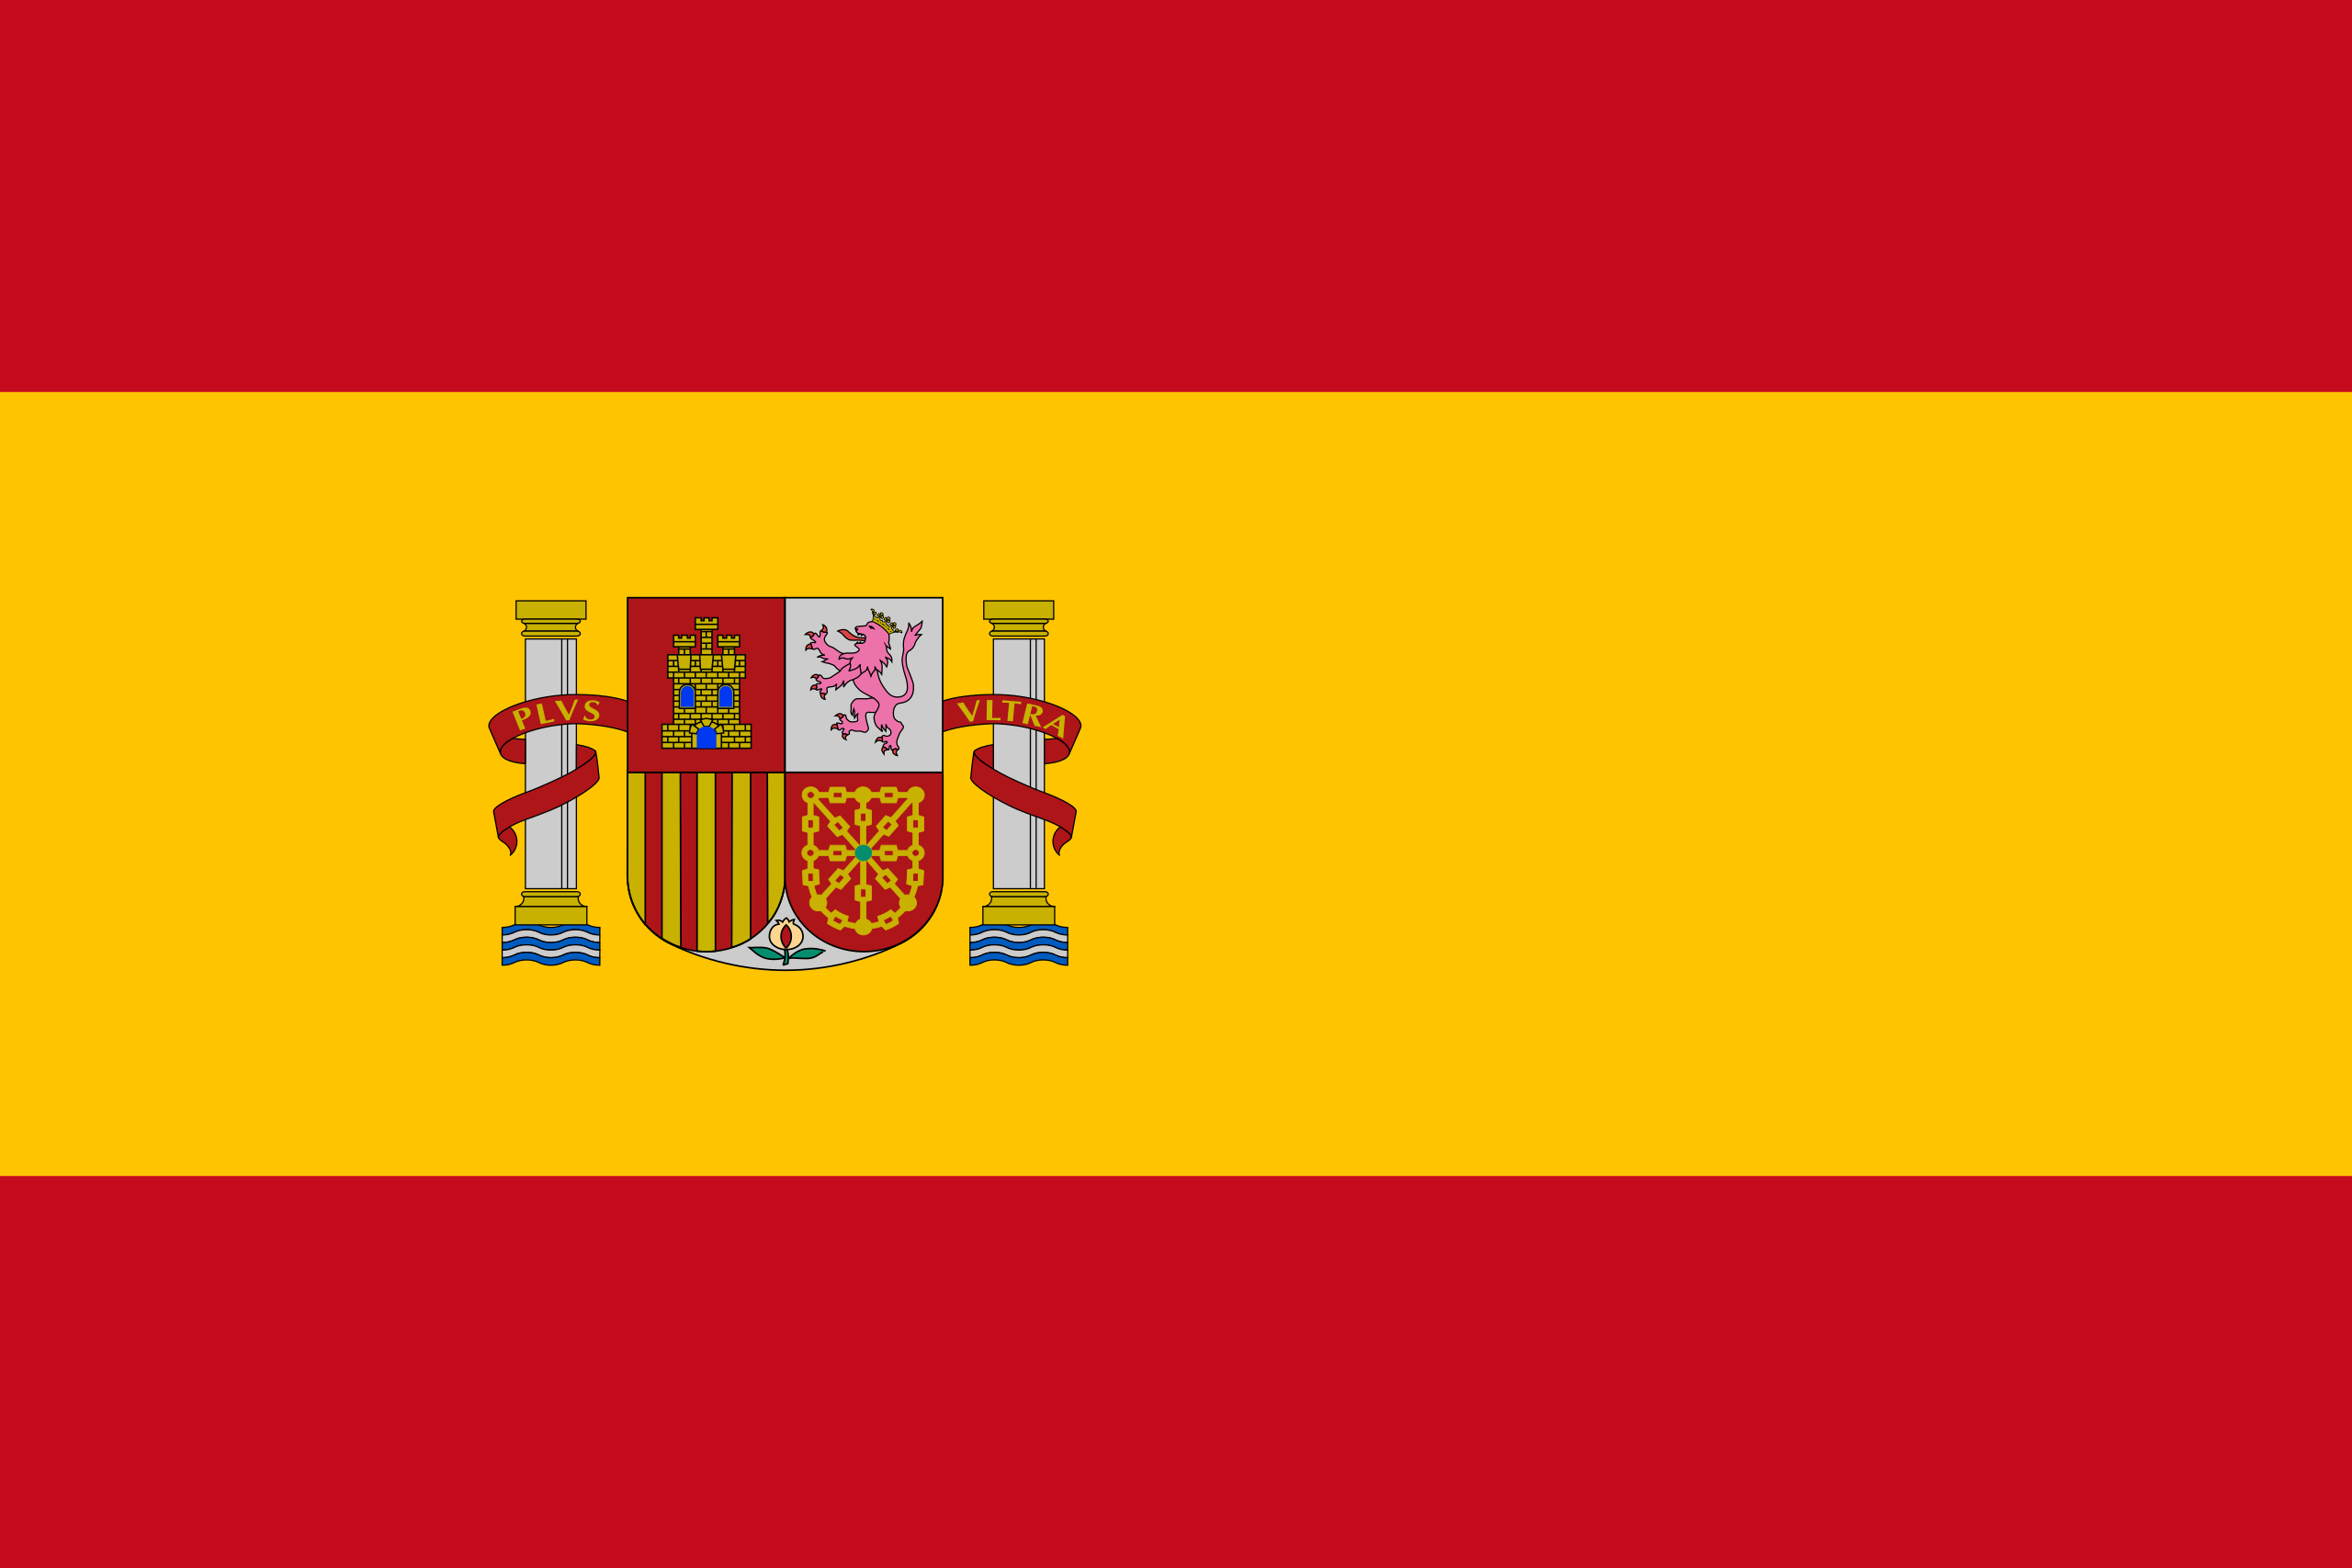 New Spain - Wikipedia